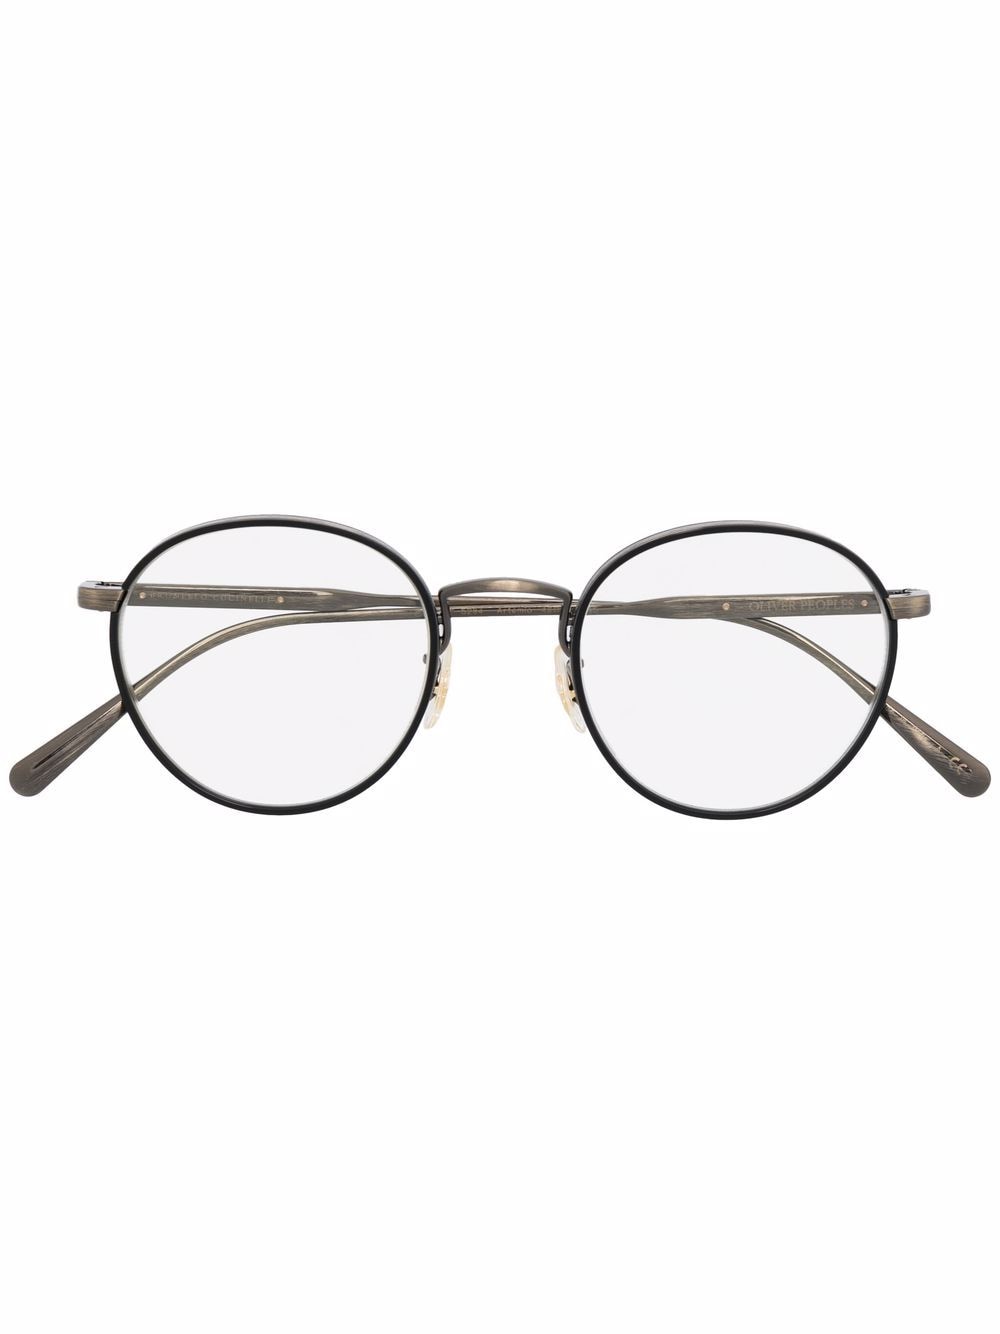 фото Brunello cucinelli очки-клипоны artemio в круглой оправе